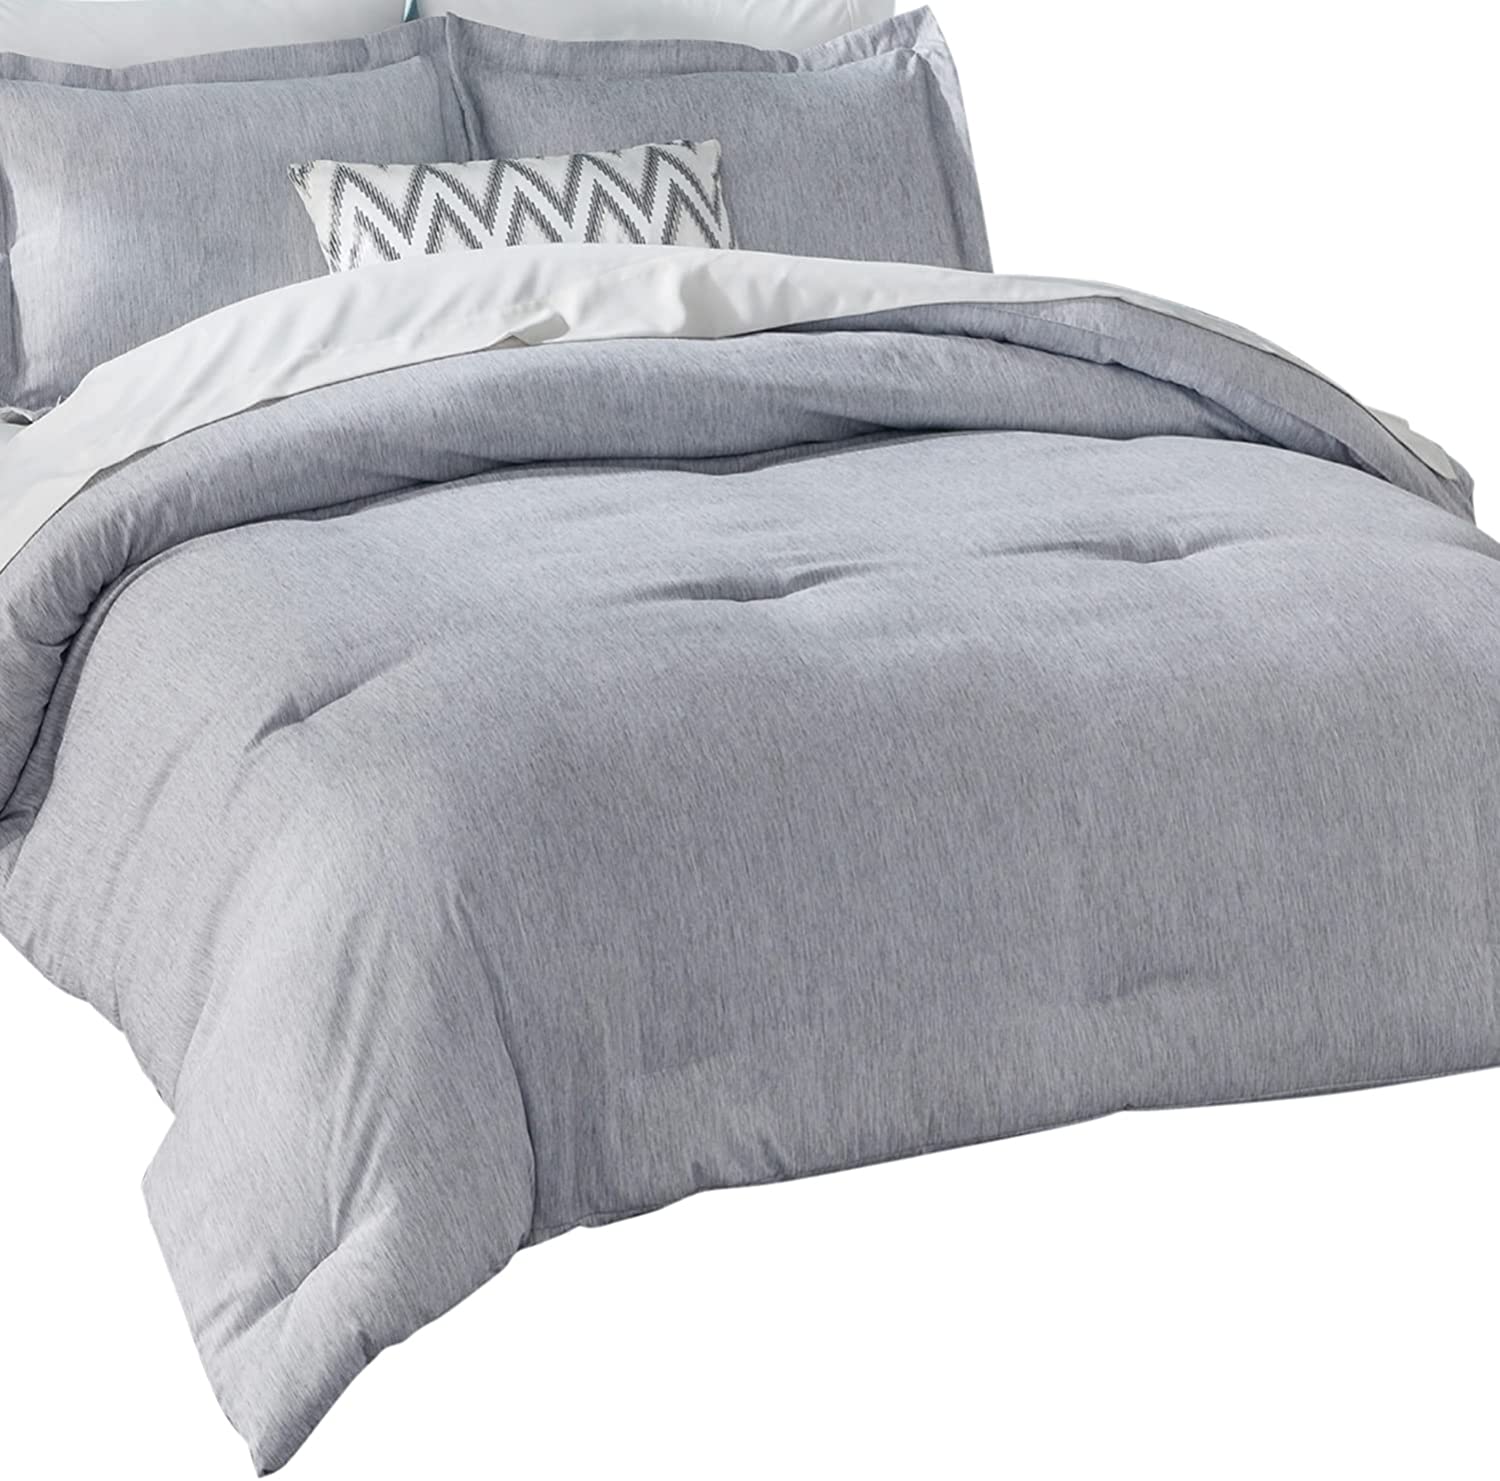 Bedsure Machine Washable Comforter Set, 3-Piece